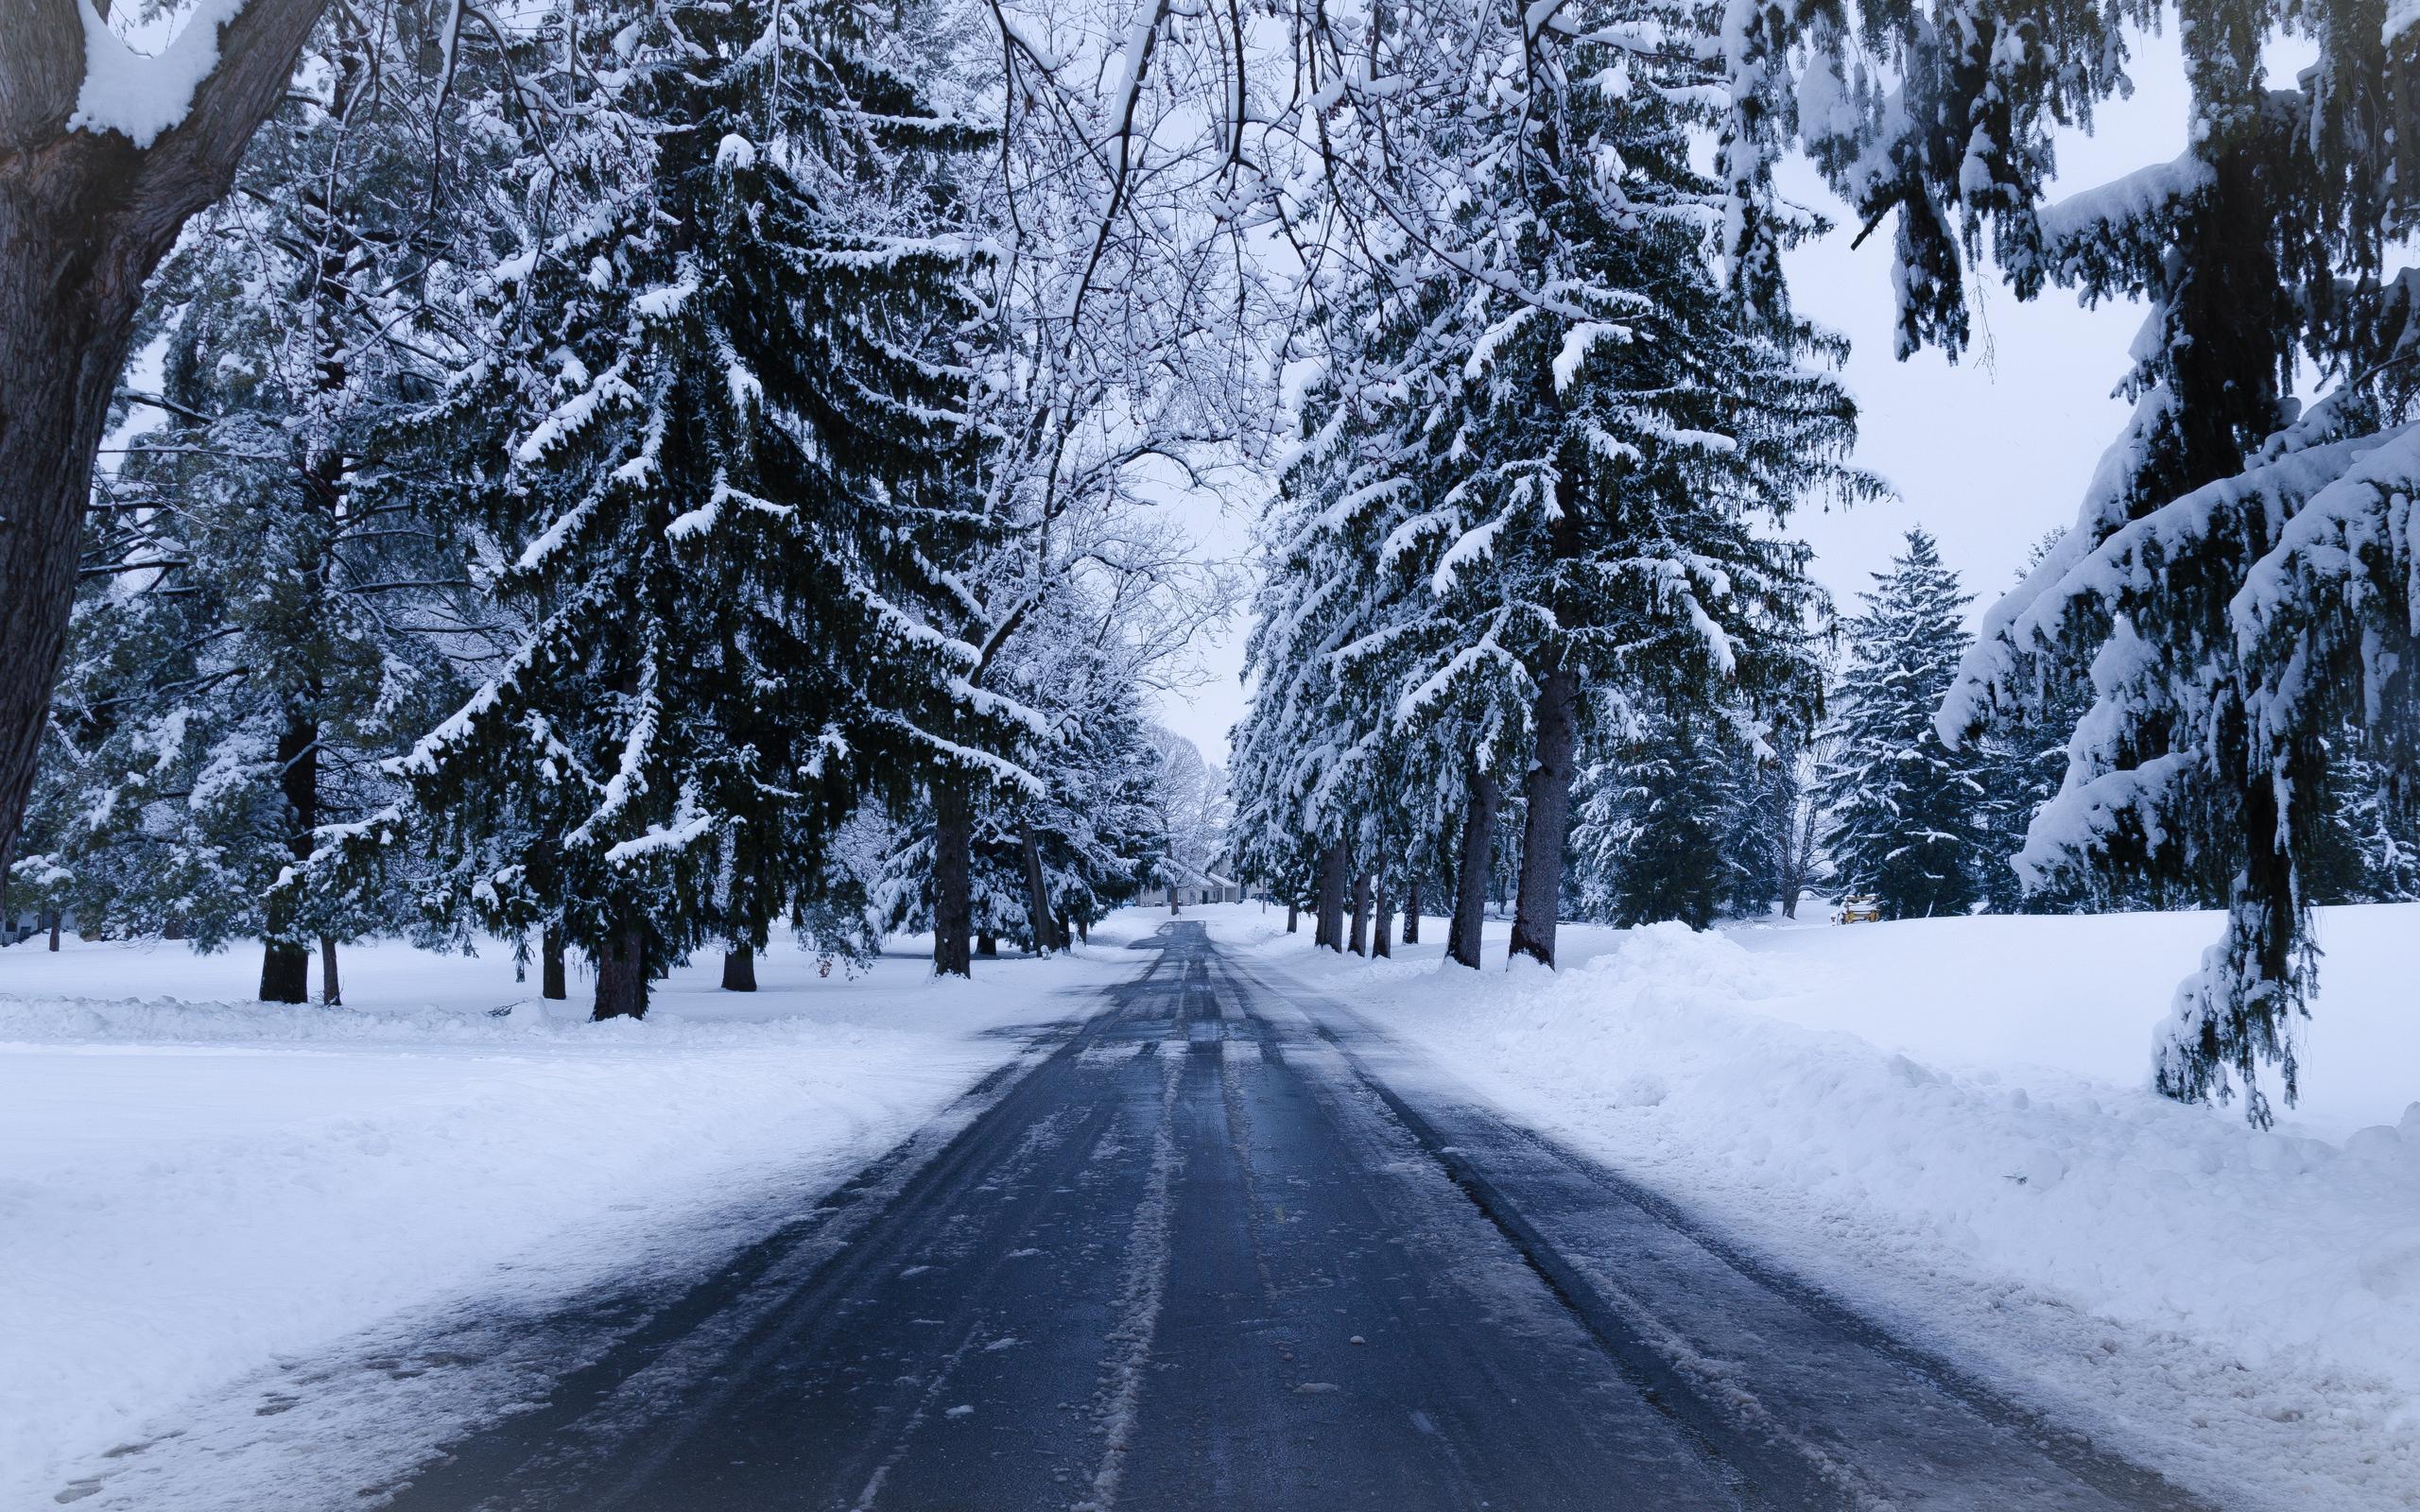 Download wallpaper 2560x1600 winter, road, snow, trees